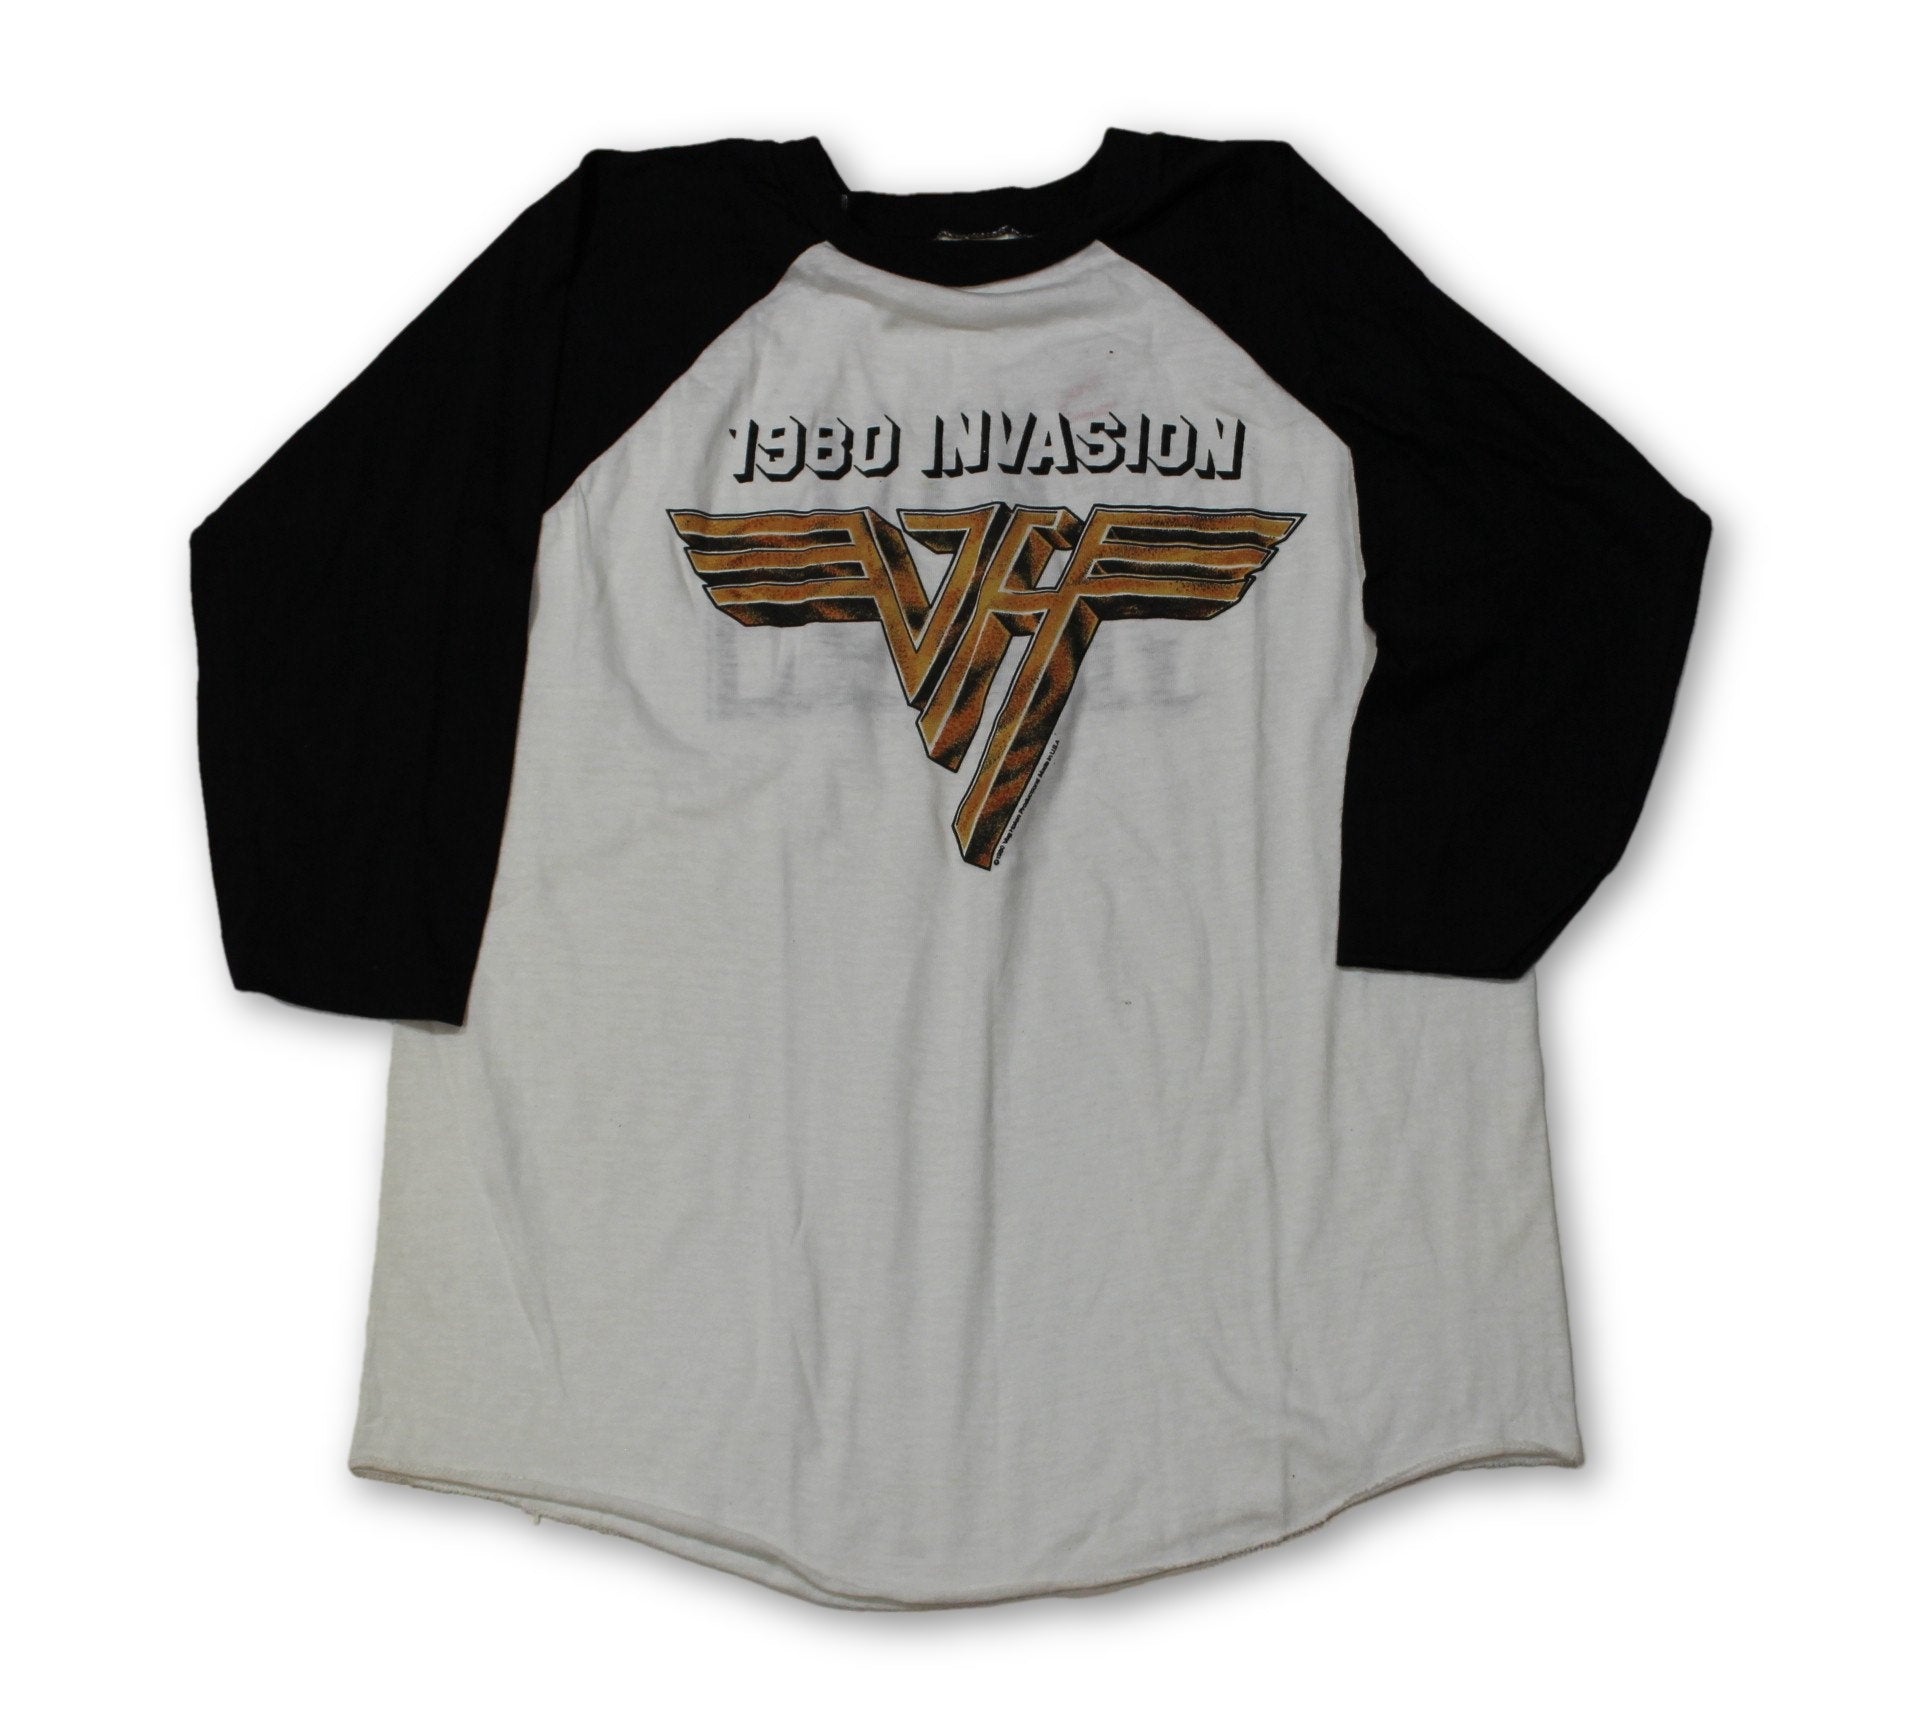 Vintage Van Halen "Invasion" Raglan T-shirt - jointcustodydc